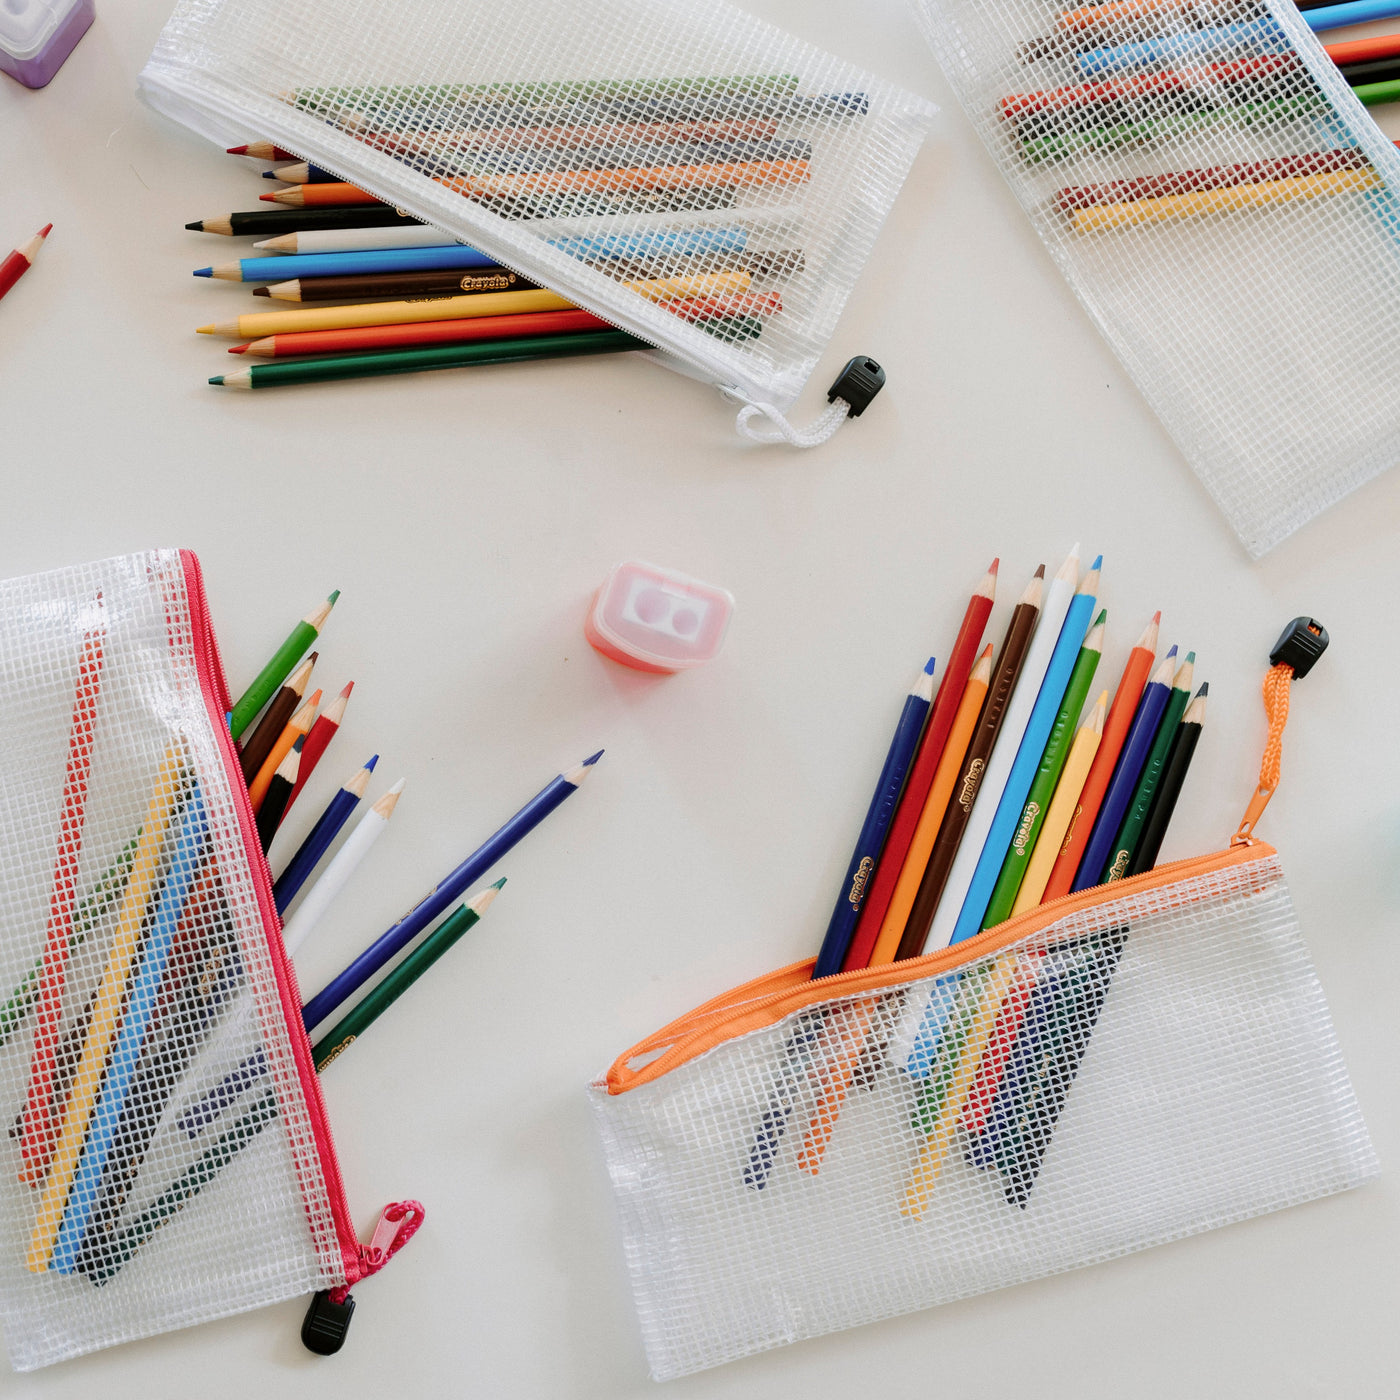 Foster & Adoptive Parents Affirmation Coloring Book | Colored pencil & pouch set